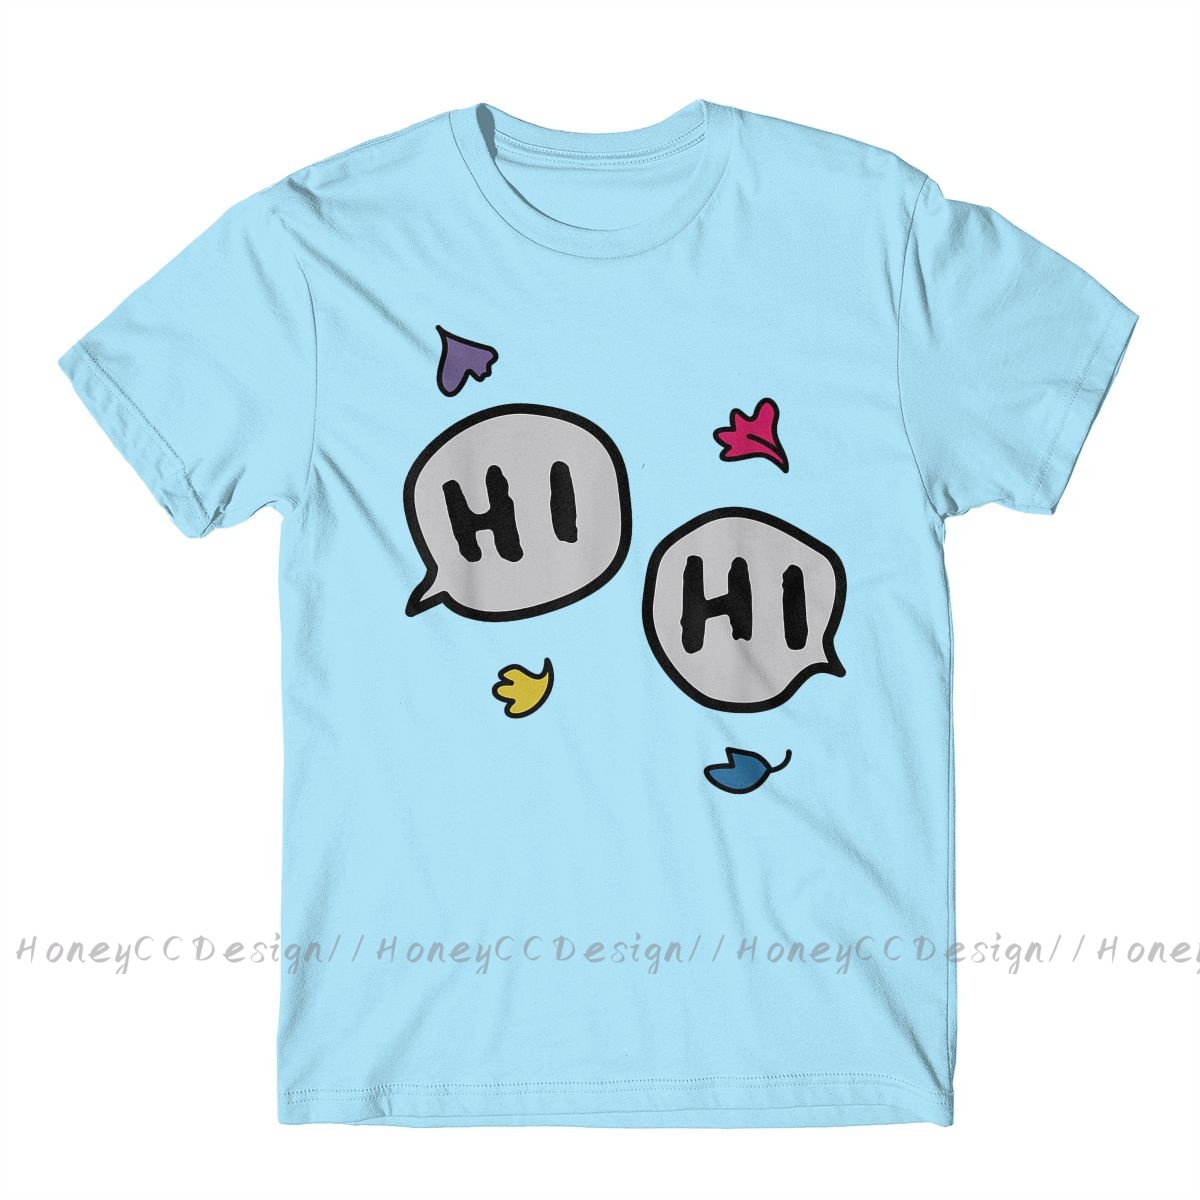 Heartstopper New Arrival T Shirt Hi Funny Lover LGBT Shirt Crewneck Cotton Men TShirt For Adults Plus Size